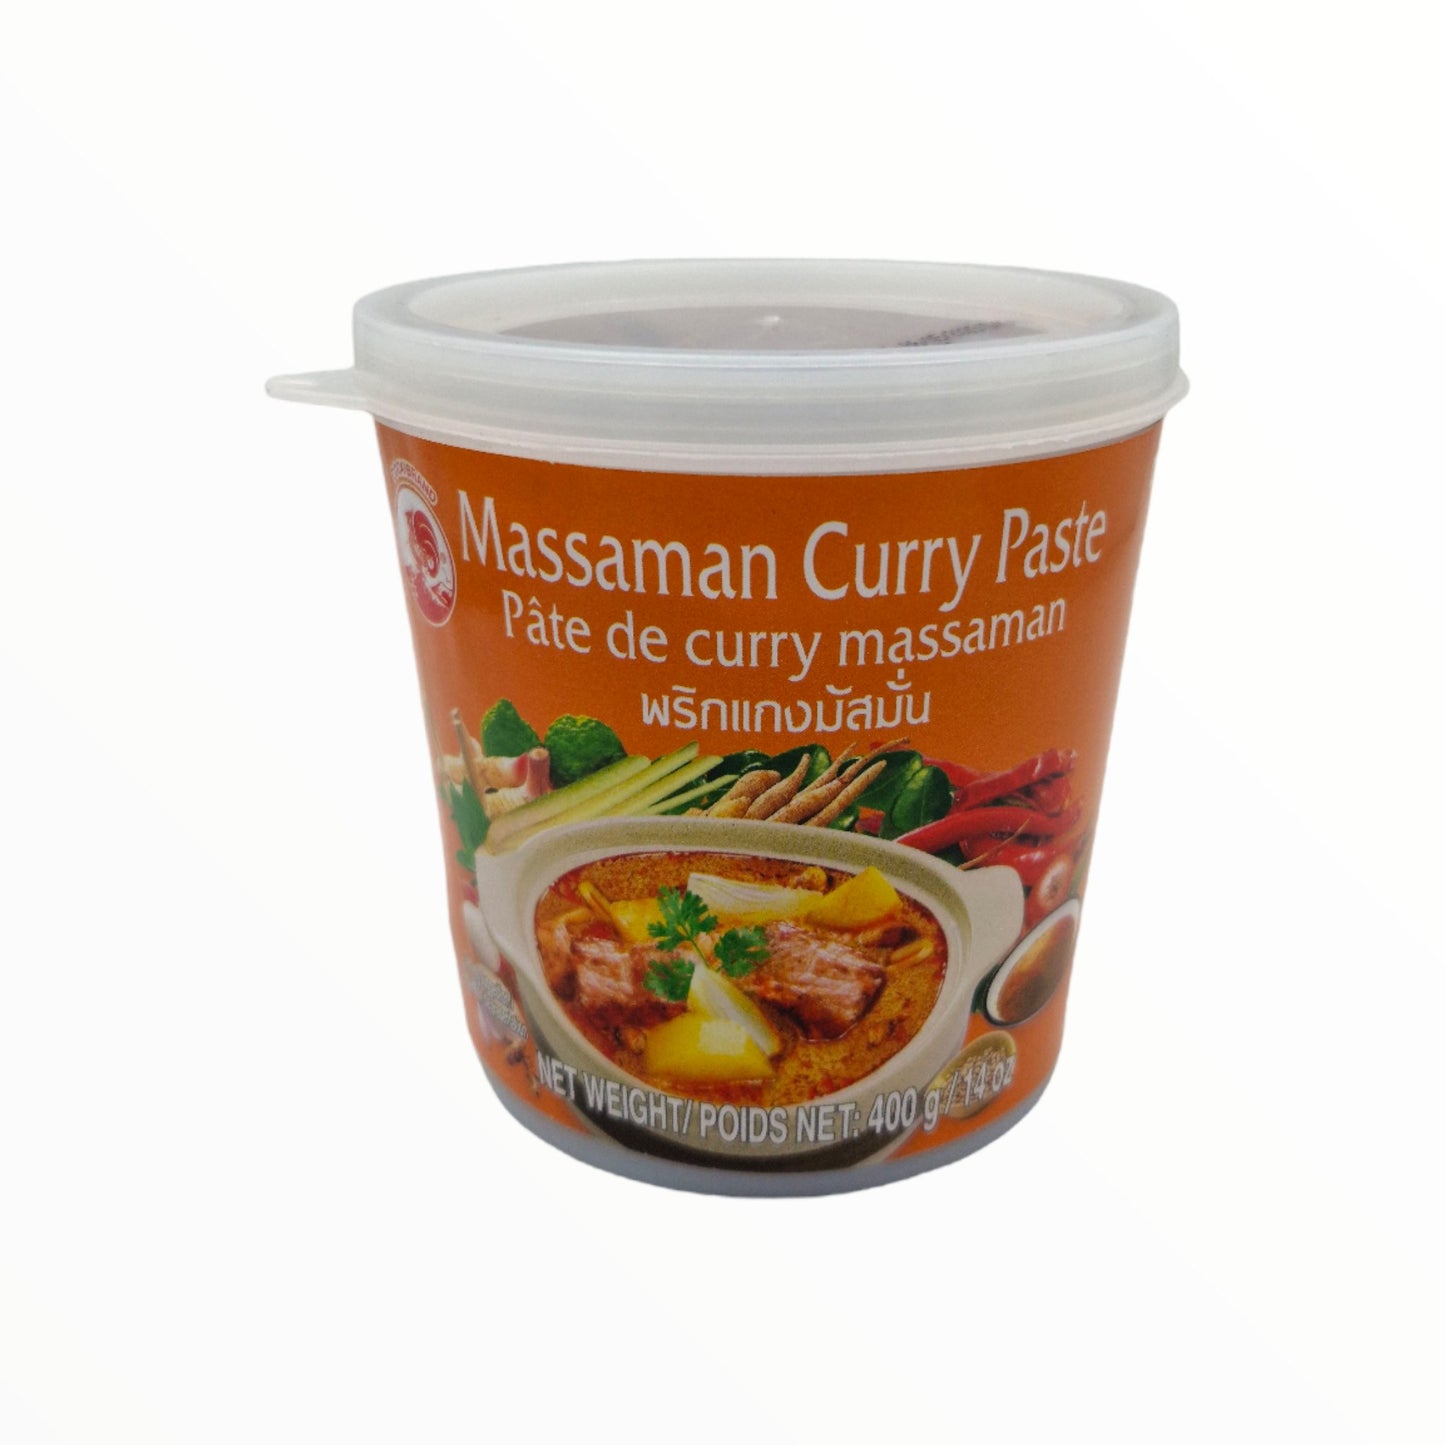 Massaman Curry Paste 400g - Mabuhay Pinoy Asia Shop